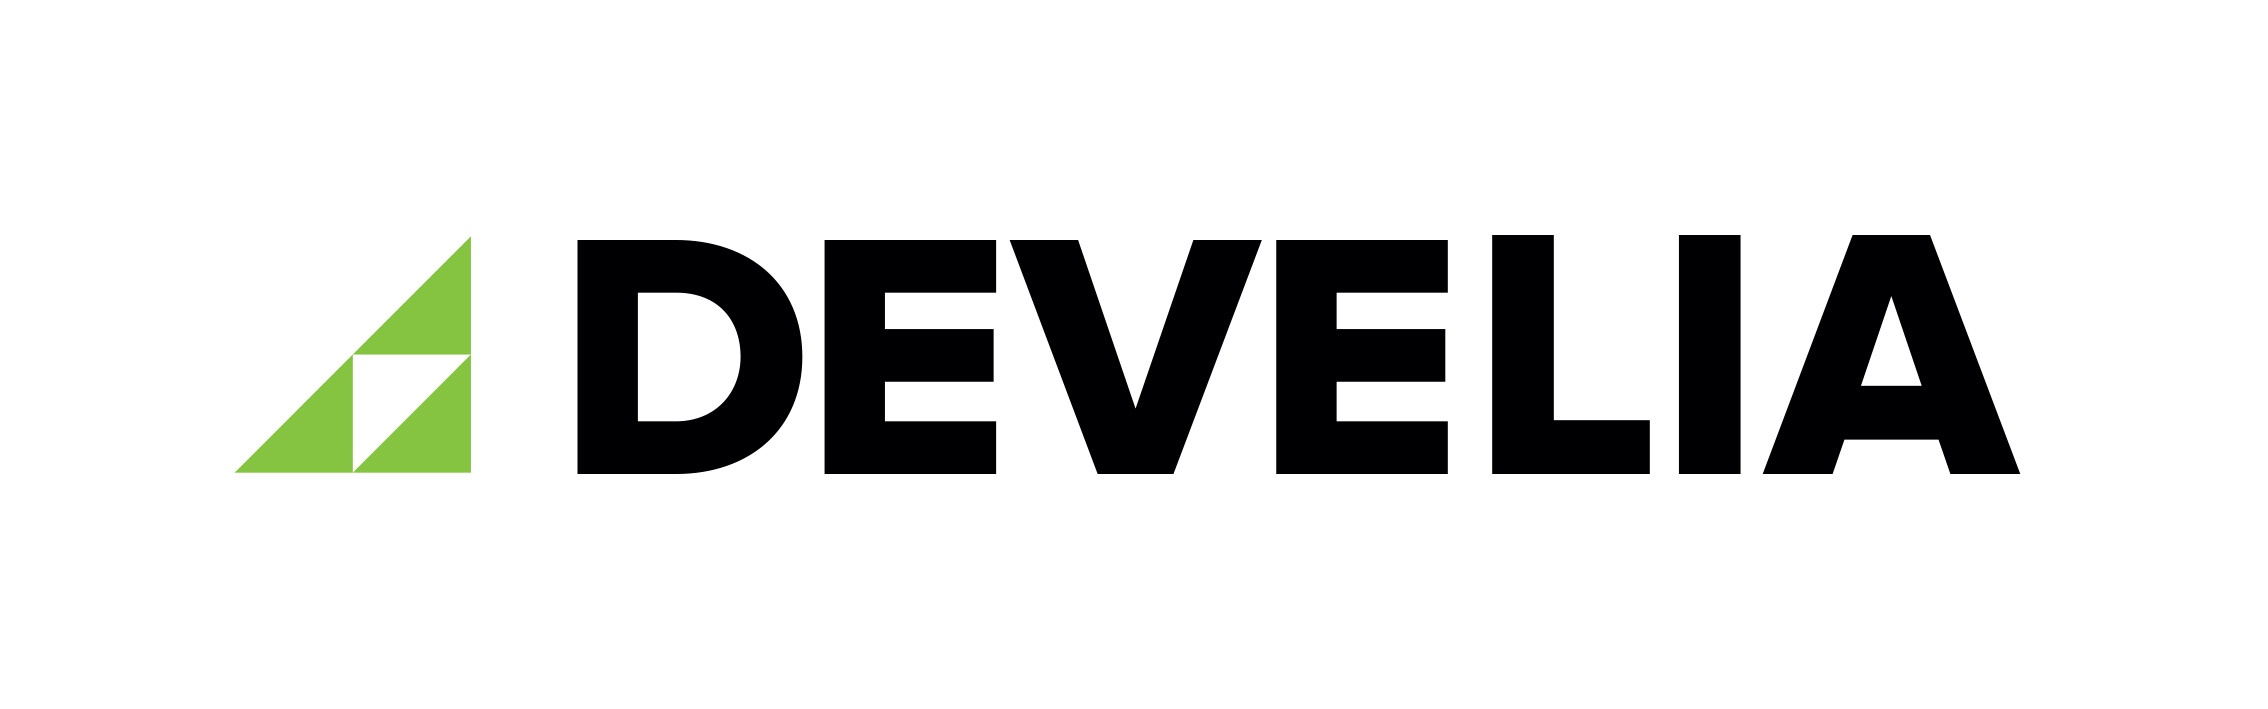 Develia logo 